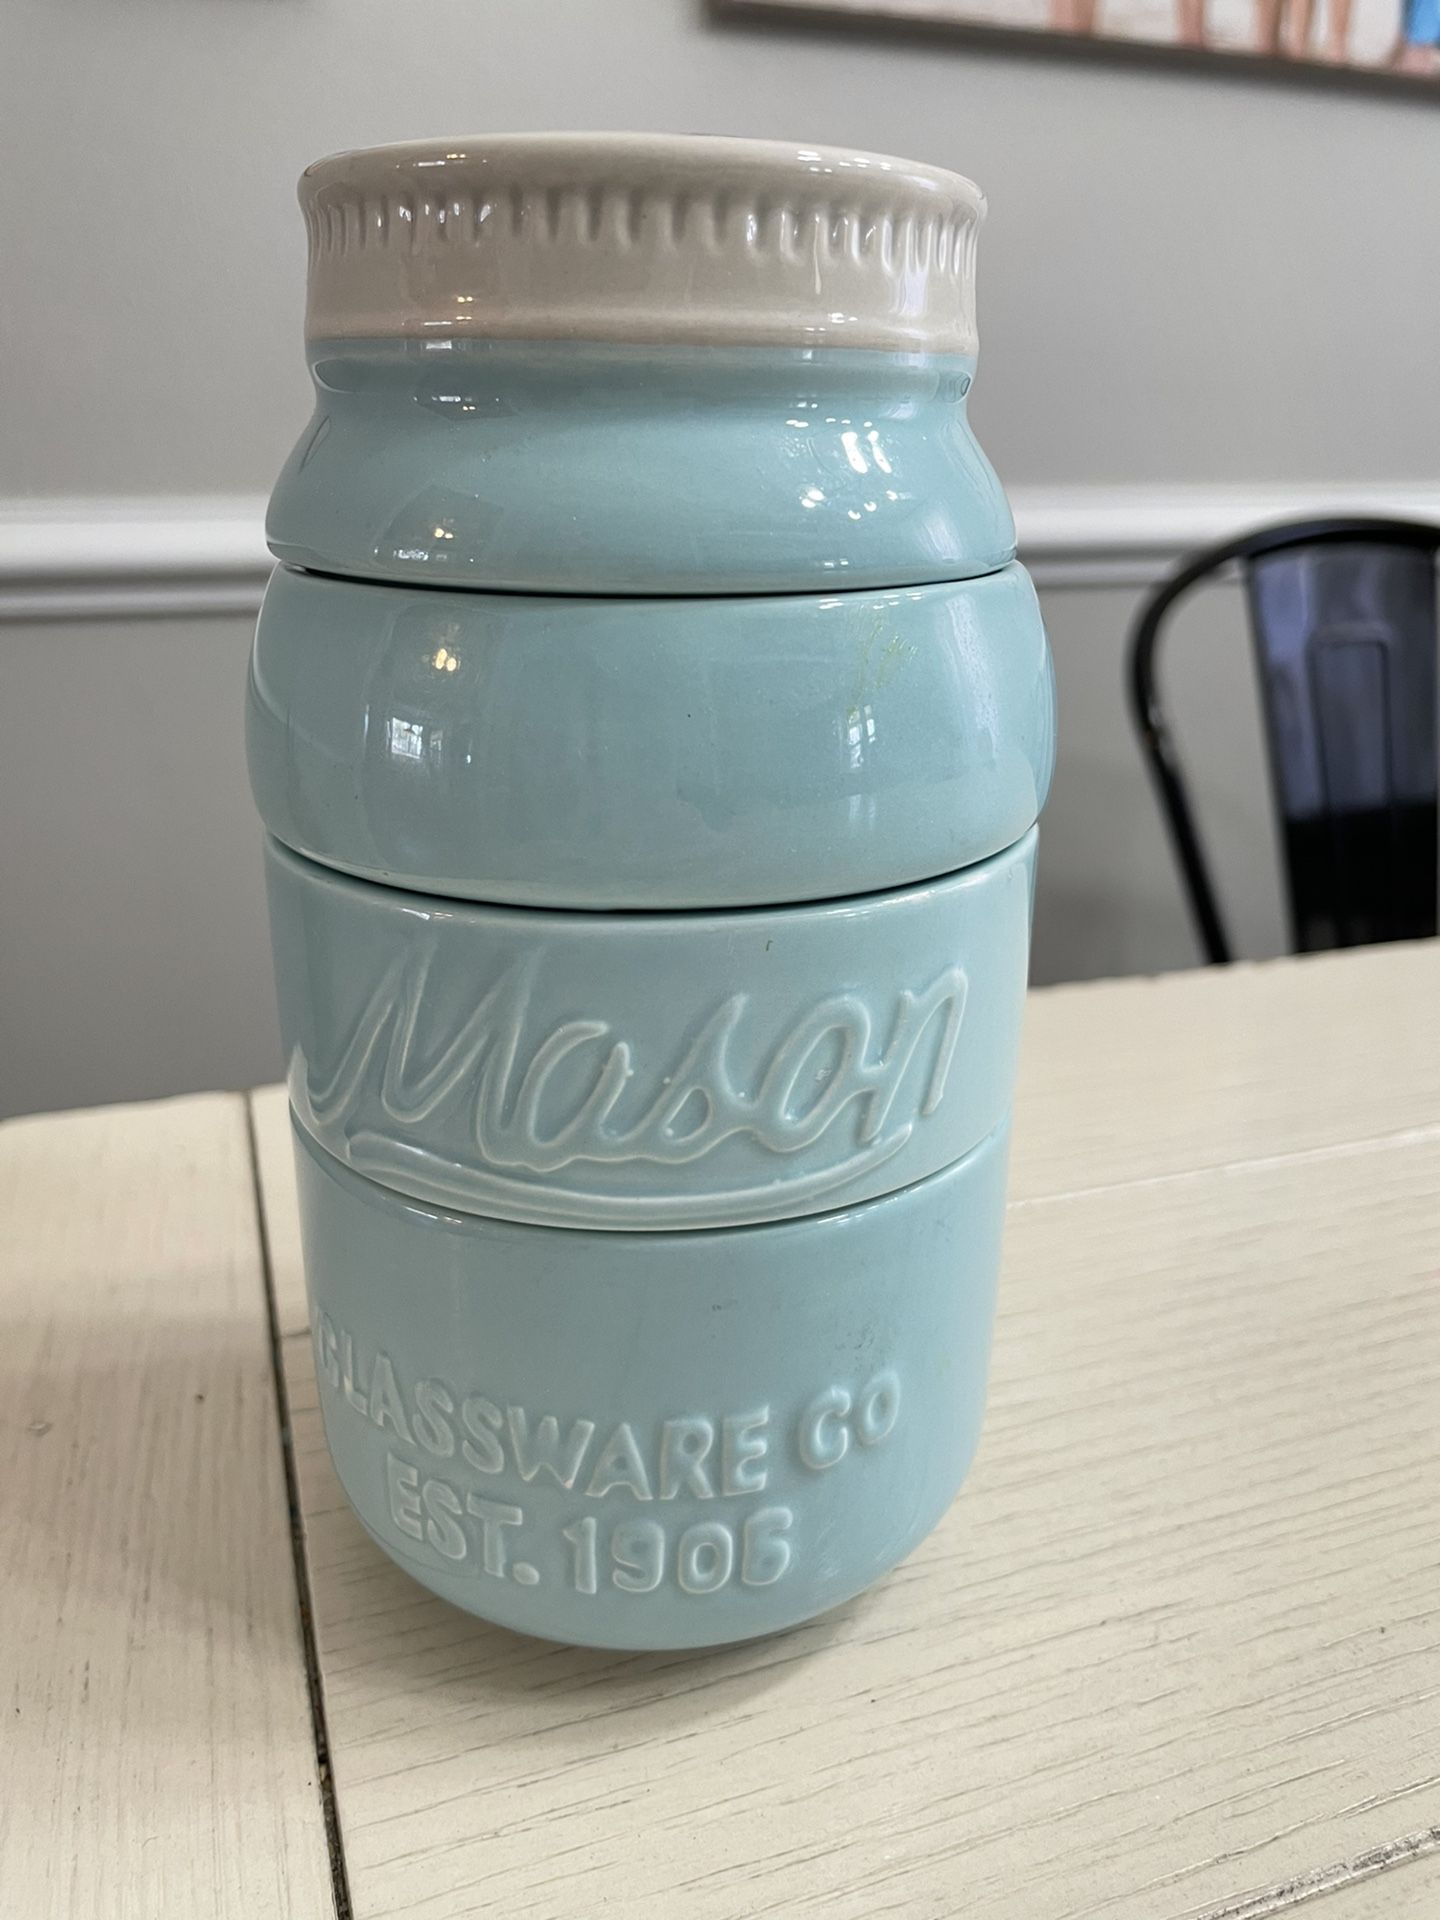 Blue Ceramic Mason Jar Measuring Cups for Sale in Chesapeake, VA - OfferUp